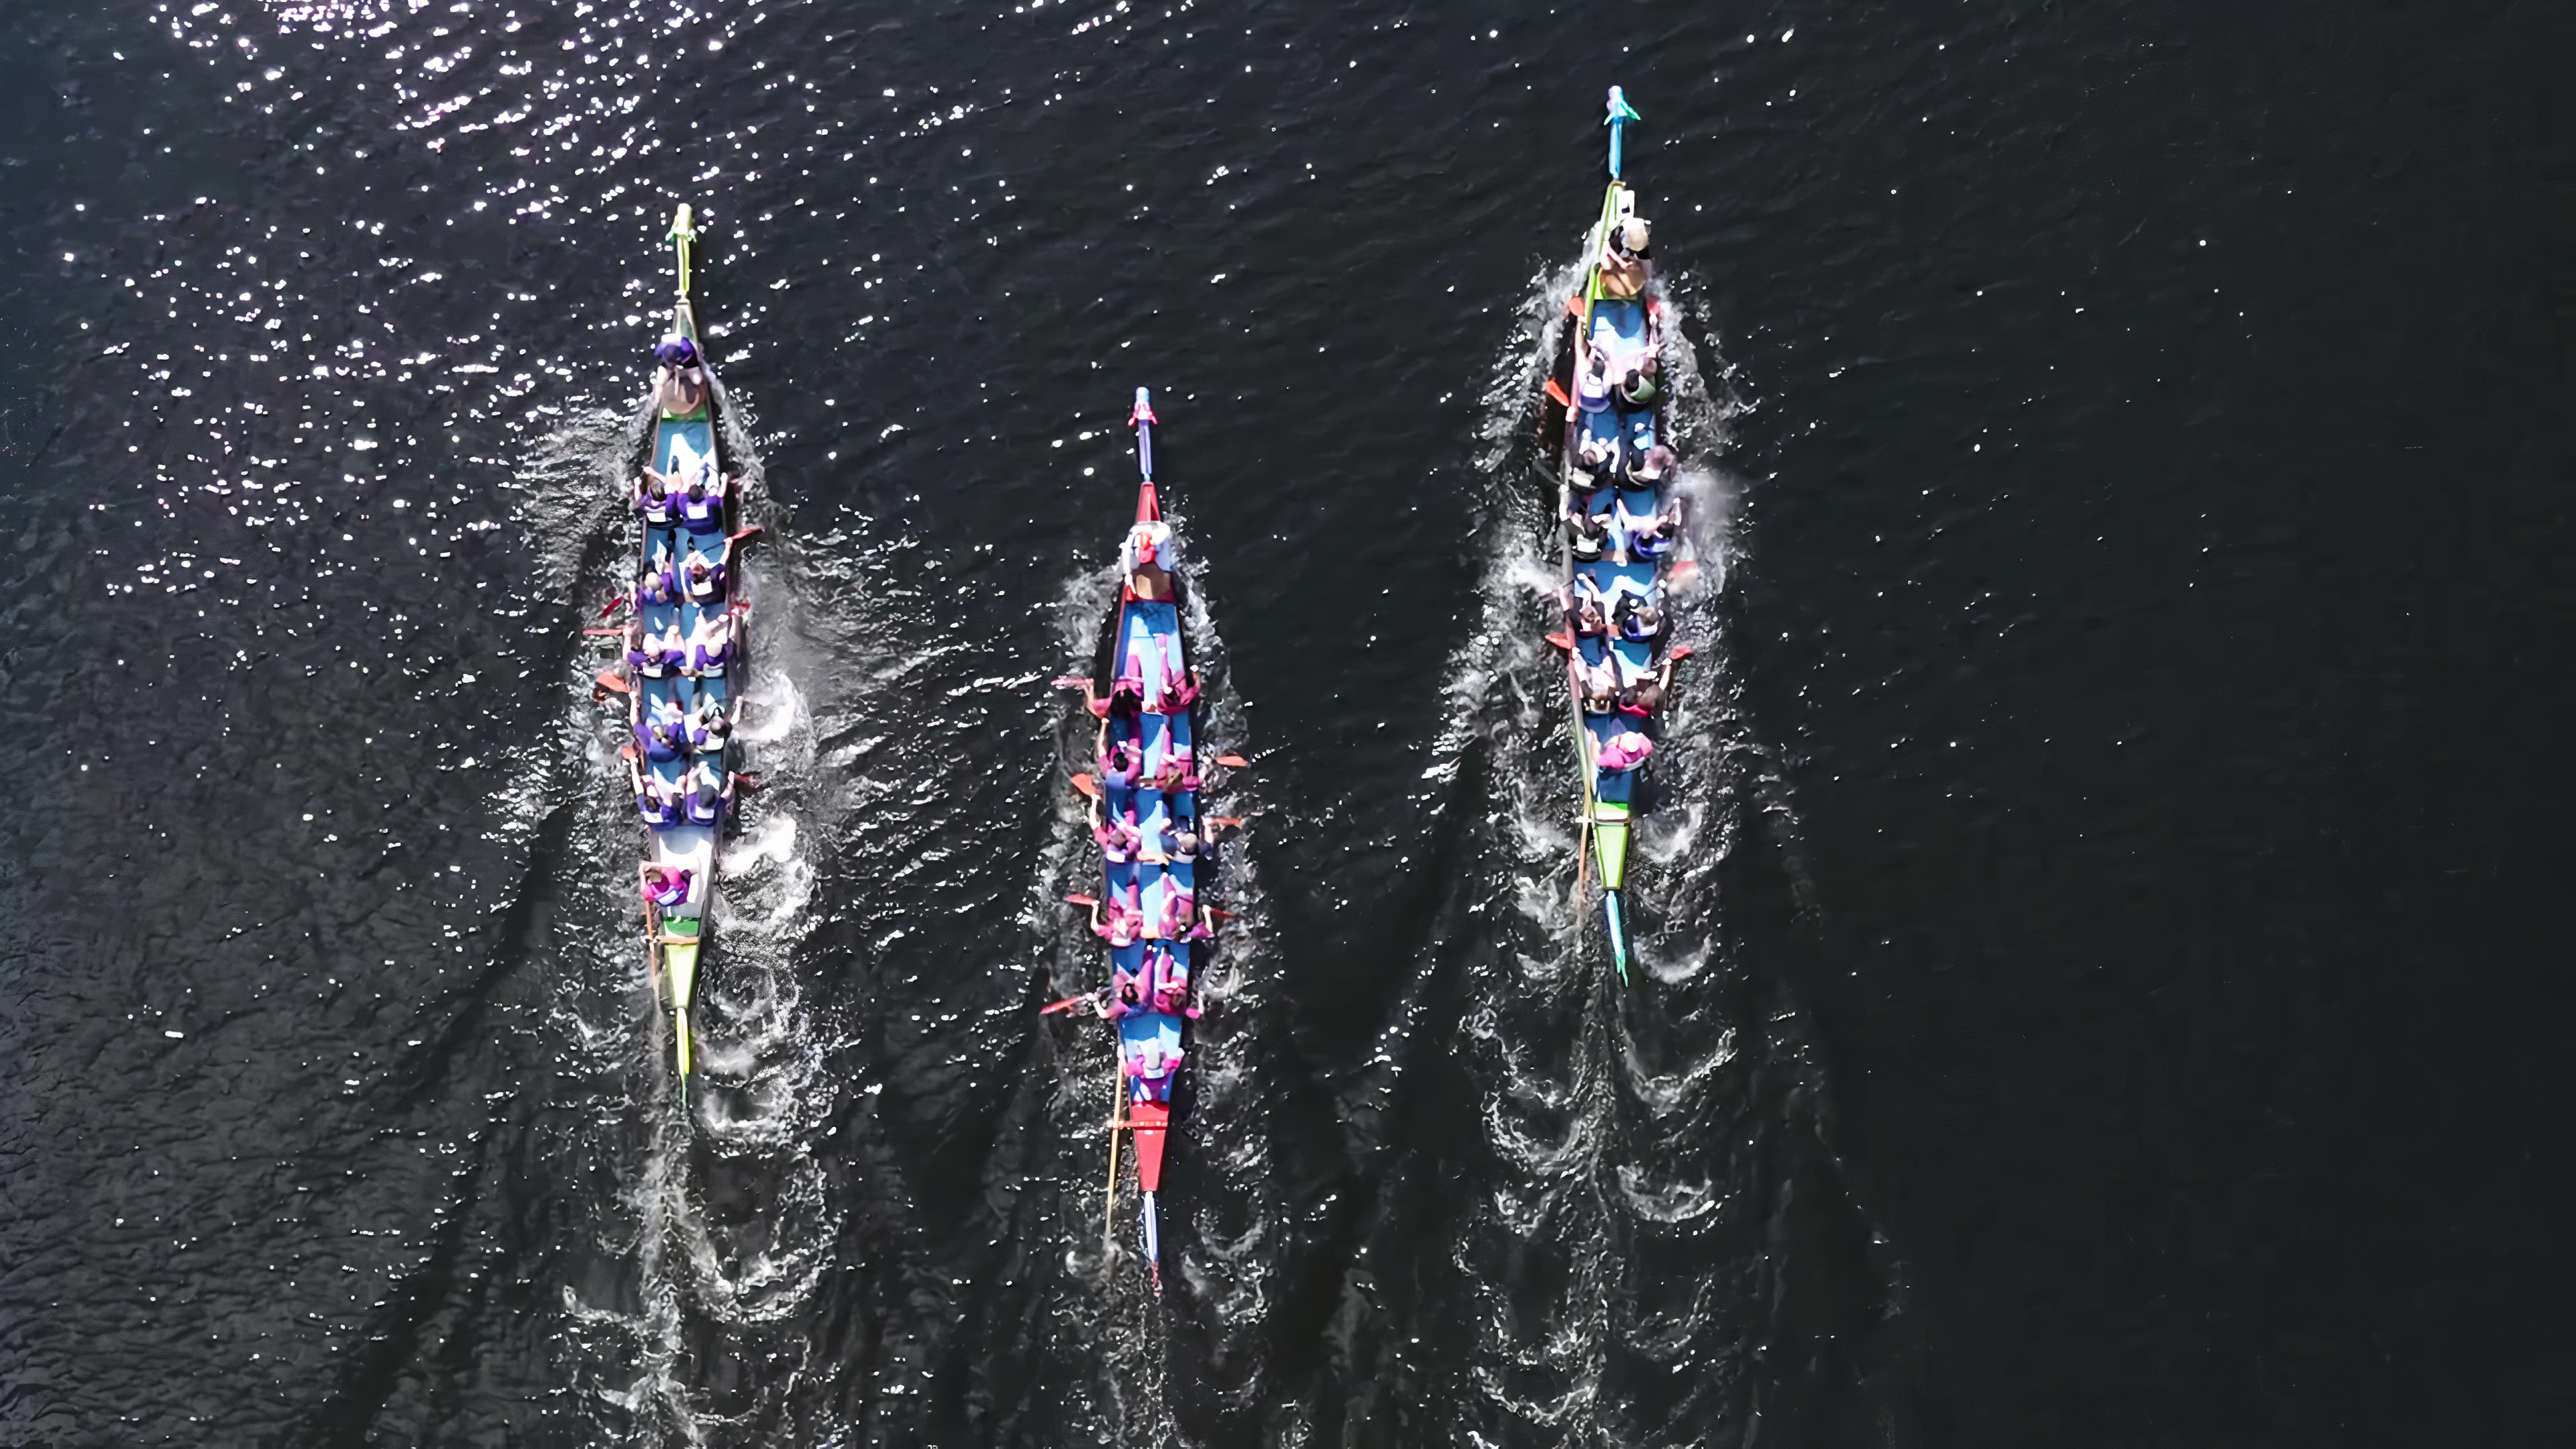 Three dragon boats racing